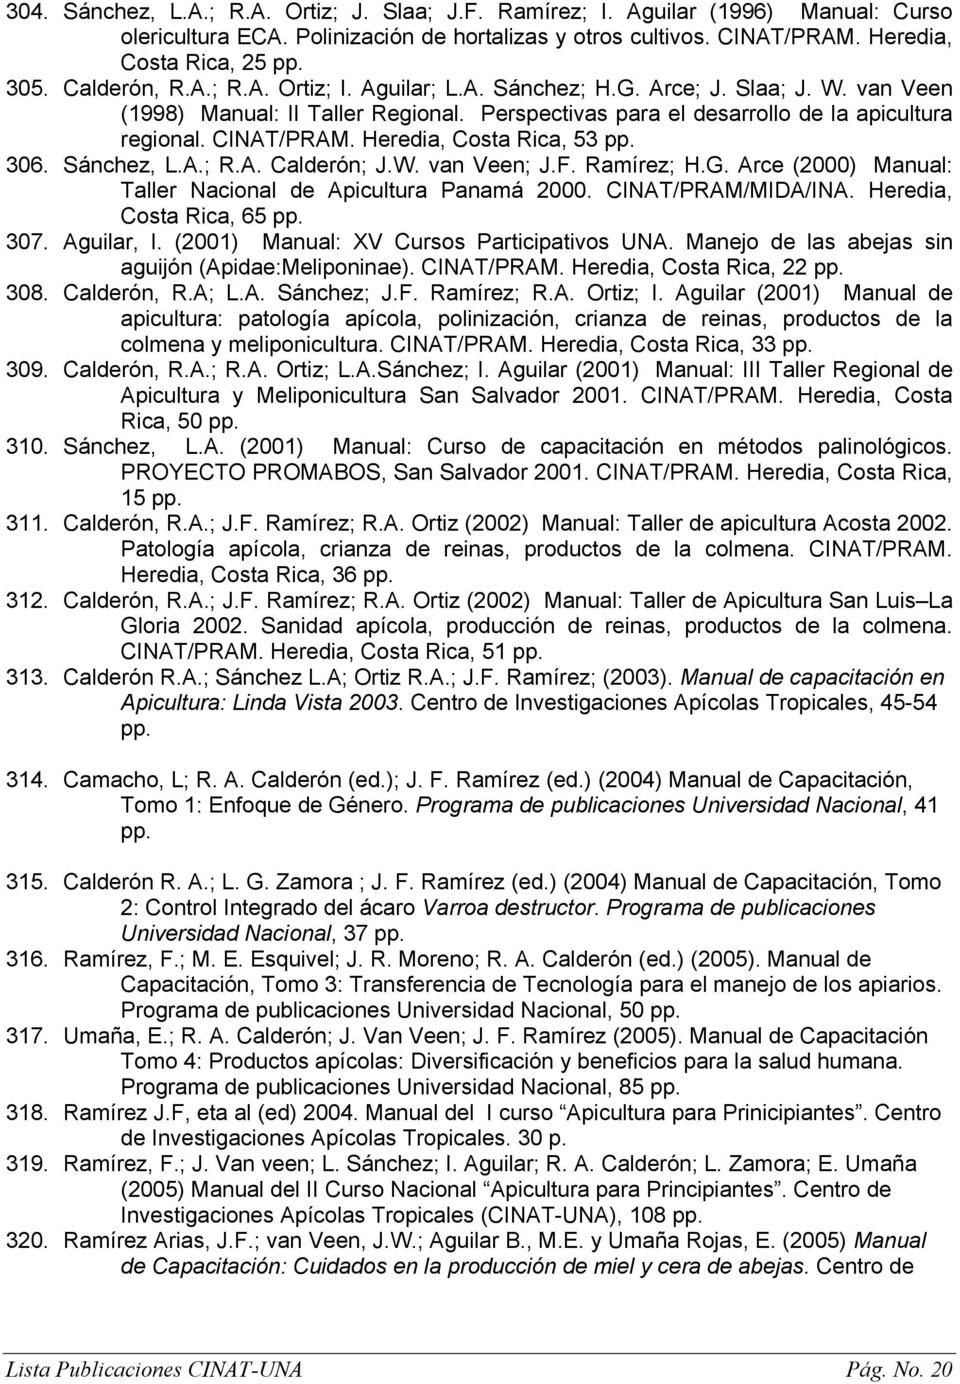 Heredia, Costa Rica, 53 pp. 306. Sánchez, L.A.; R.A. Calderón; J.W. van Veen; J.F. Ramírez; H.G. Arce (2000) Manual: Taller Nacional de Apicultura Panamá 2000. CINAT/PRAM/MIDA/INA.